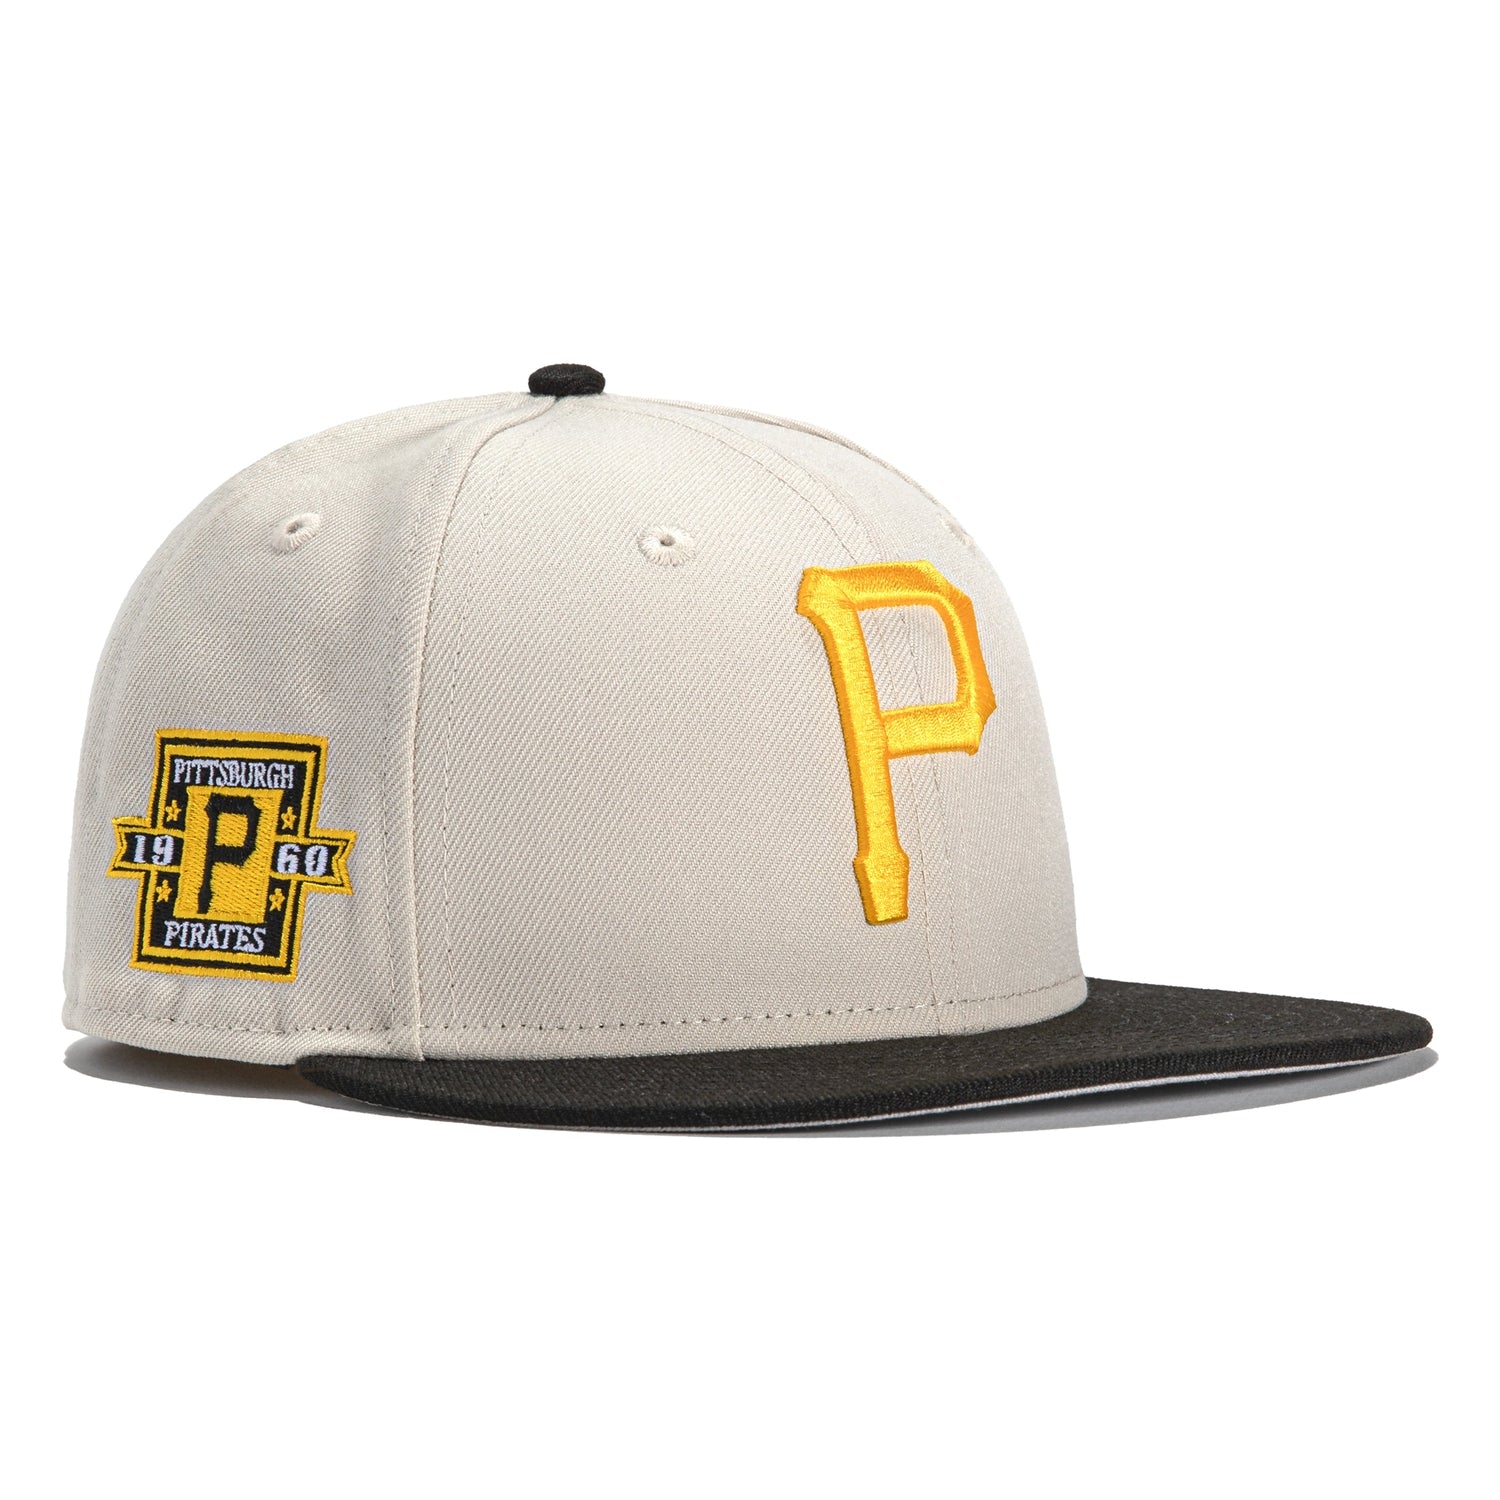 New Era Pittsburgh Pirates T-shirts in Pittsburgh Pirates Team